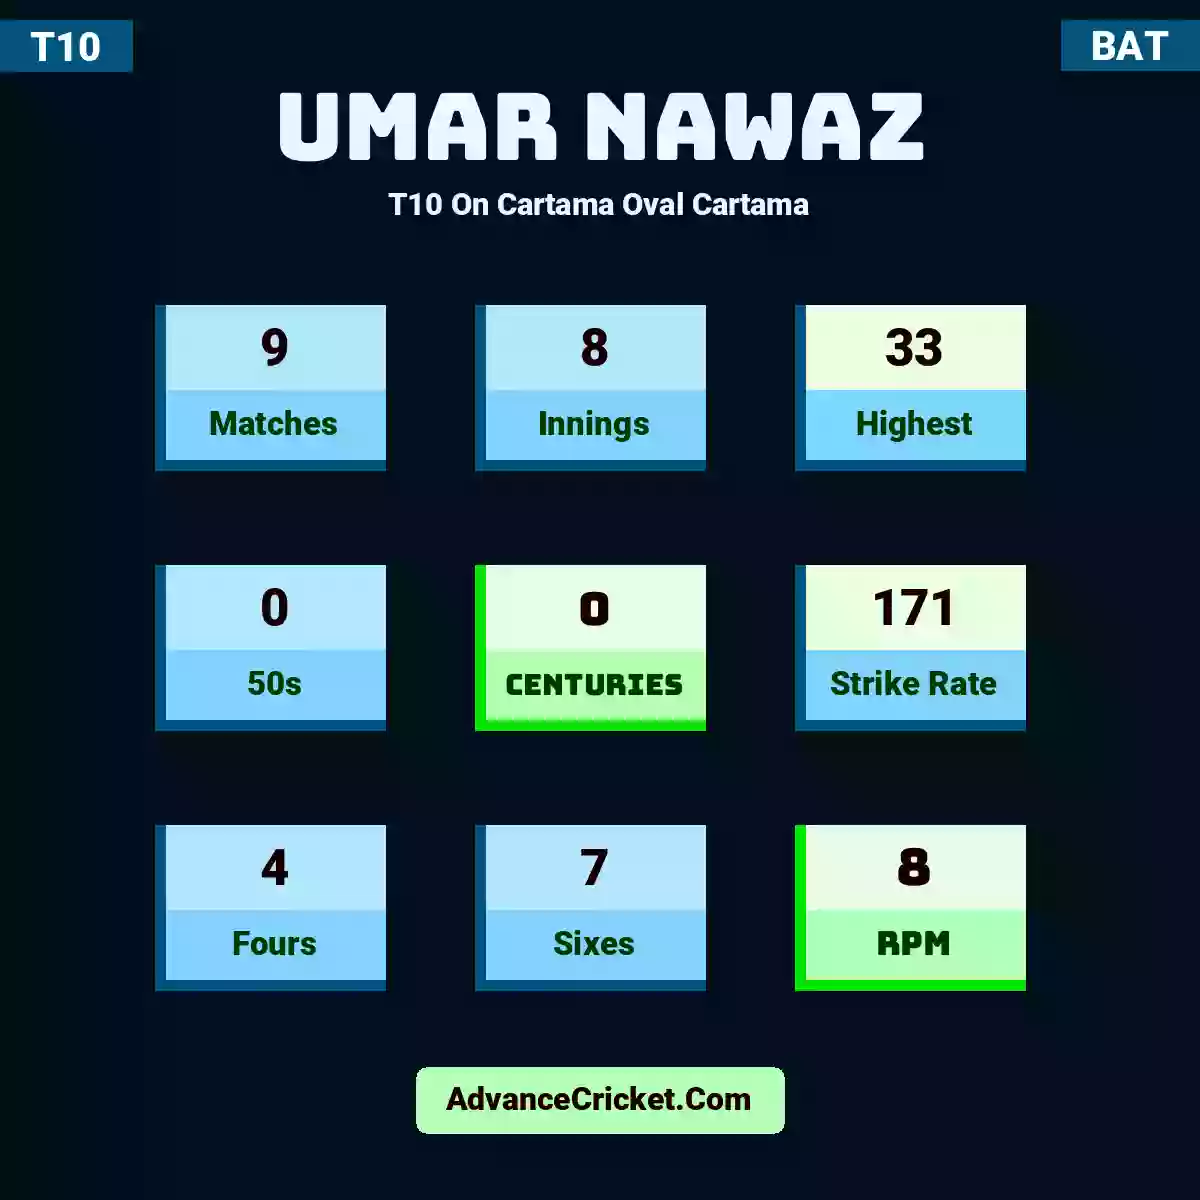 Umar Nawaz T10  On Cartama Oval Cartama, Umar Nawaz played 9 matches, scored 33 runs as highest, 0 half-centuries, and 0 centuries, with a strike rate of 171. U.Nawaz hit 4 fours and 7 sixes, with an RPM of 8.